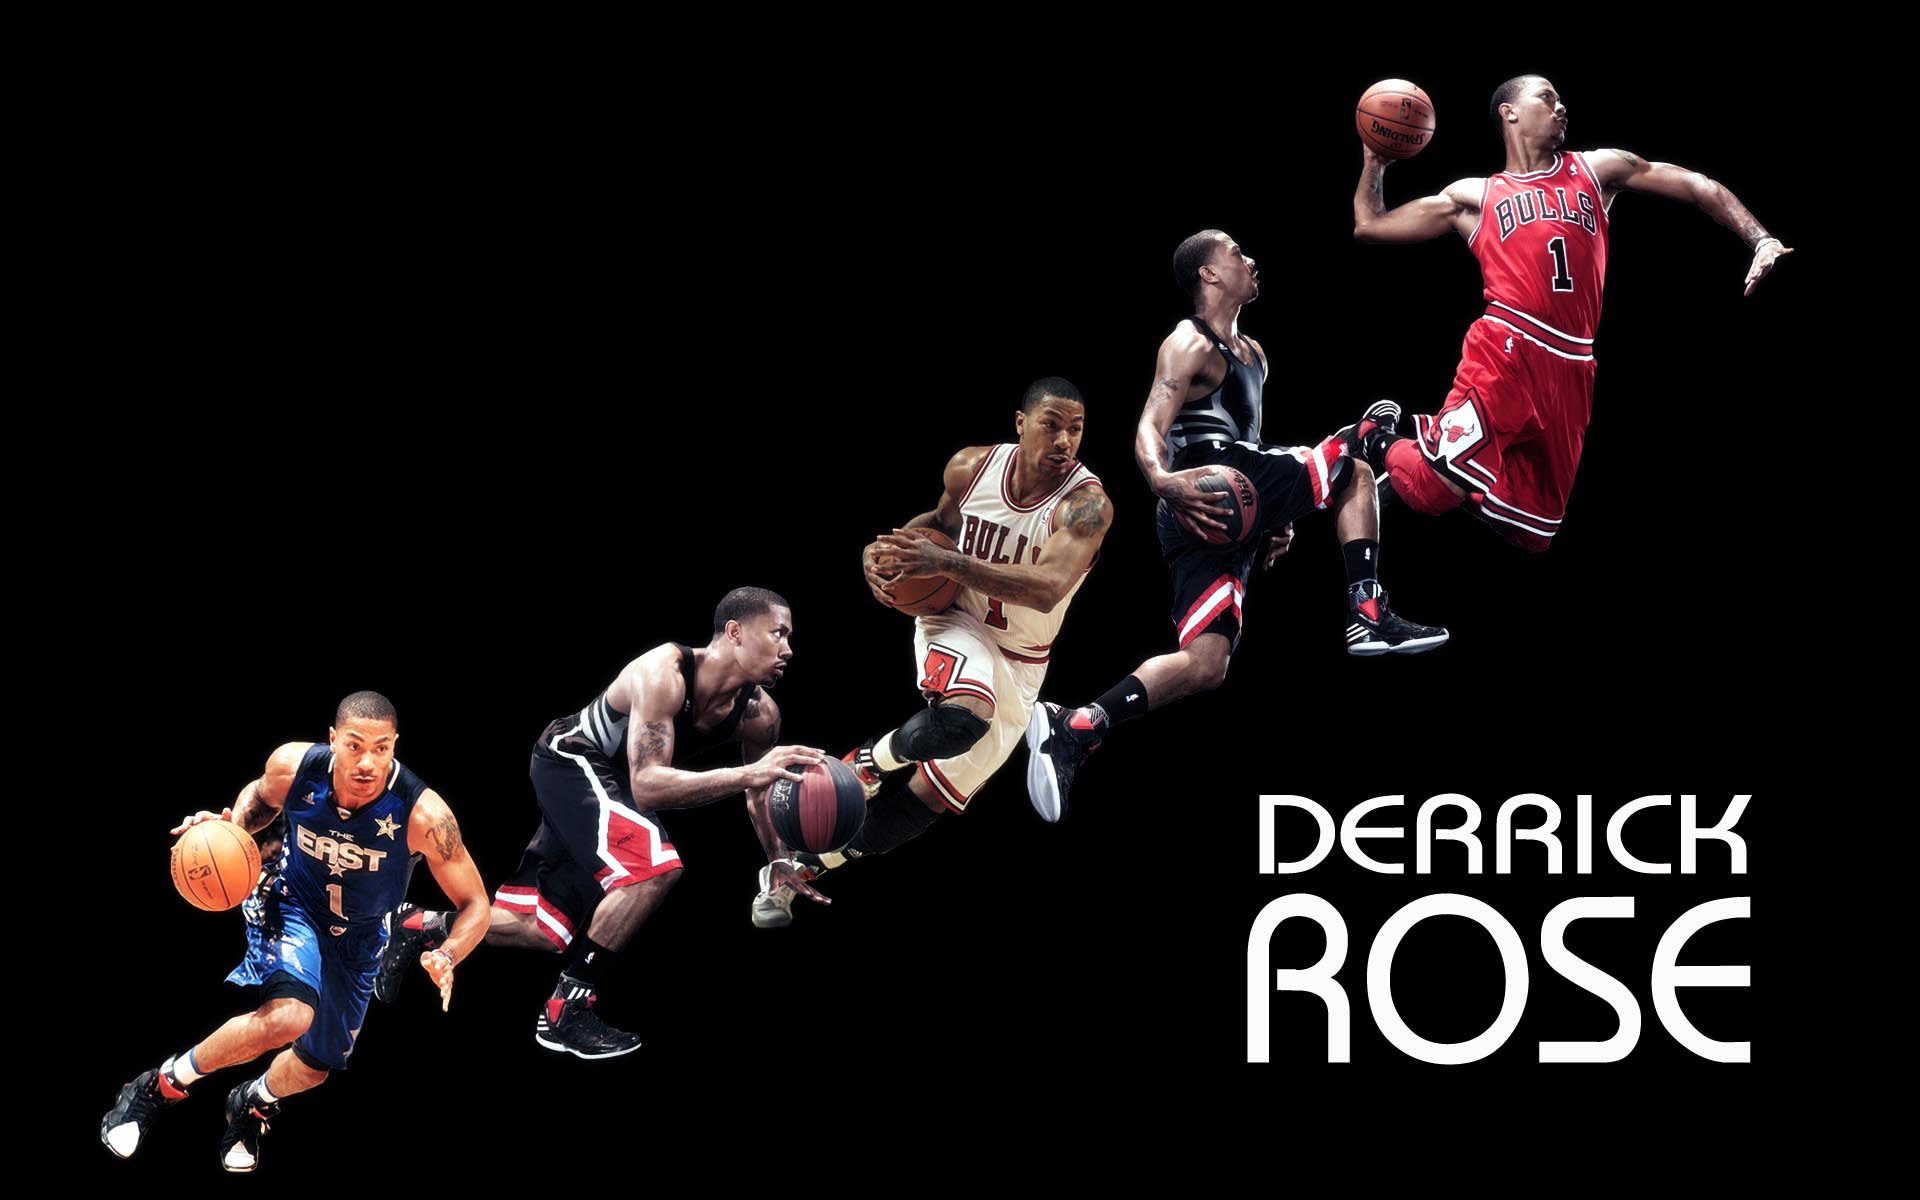 Derrick Rose Jersey Wallpapers